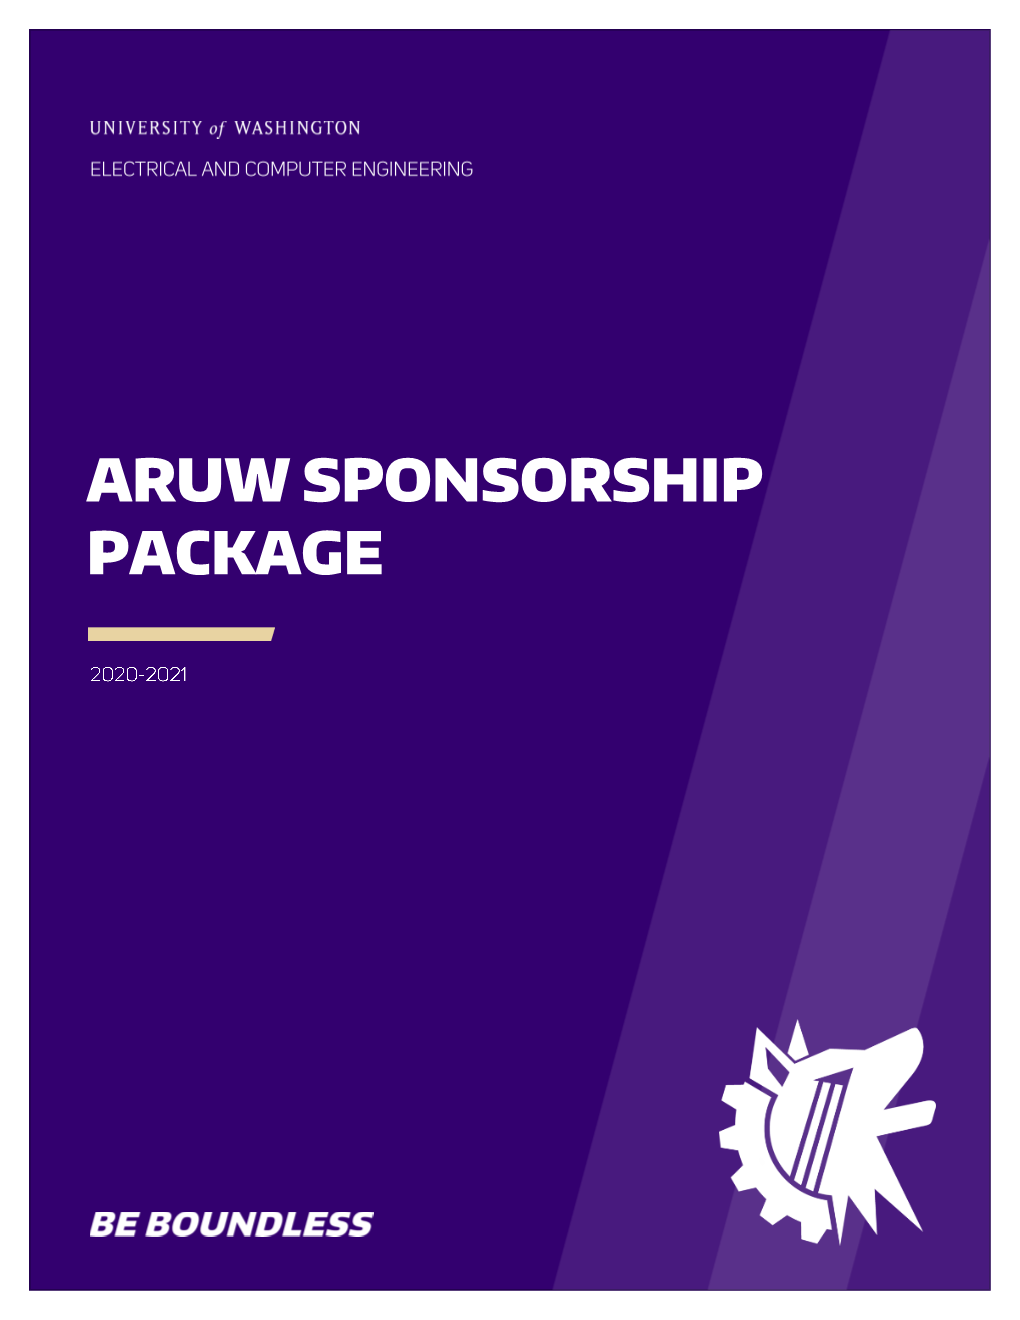 Aruw Sponsorship Package